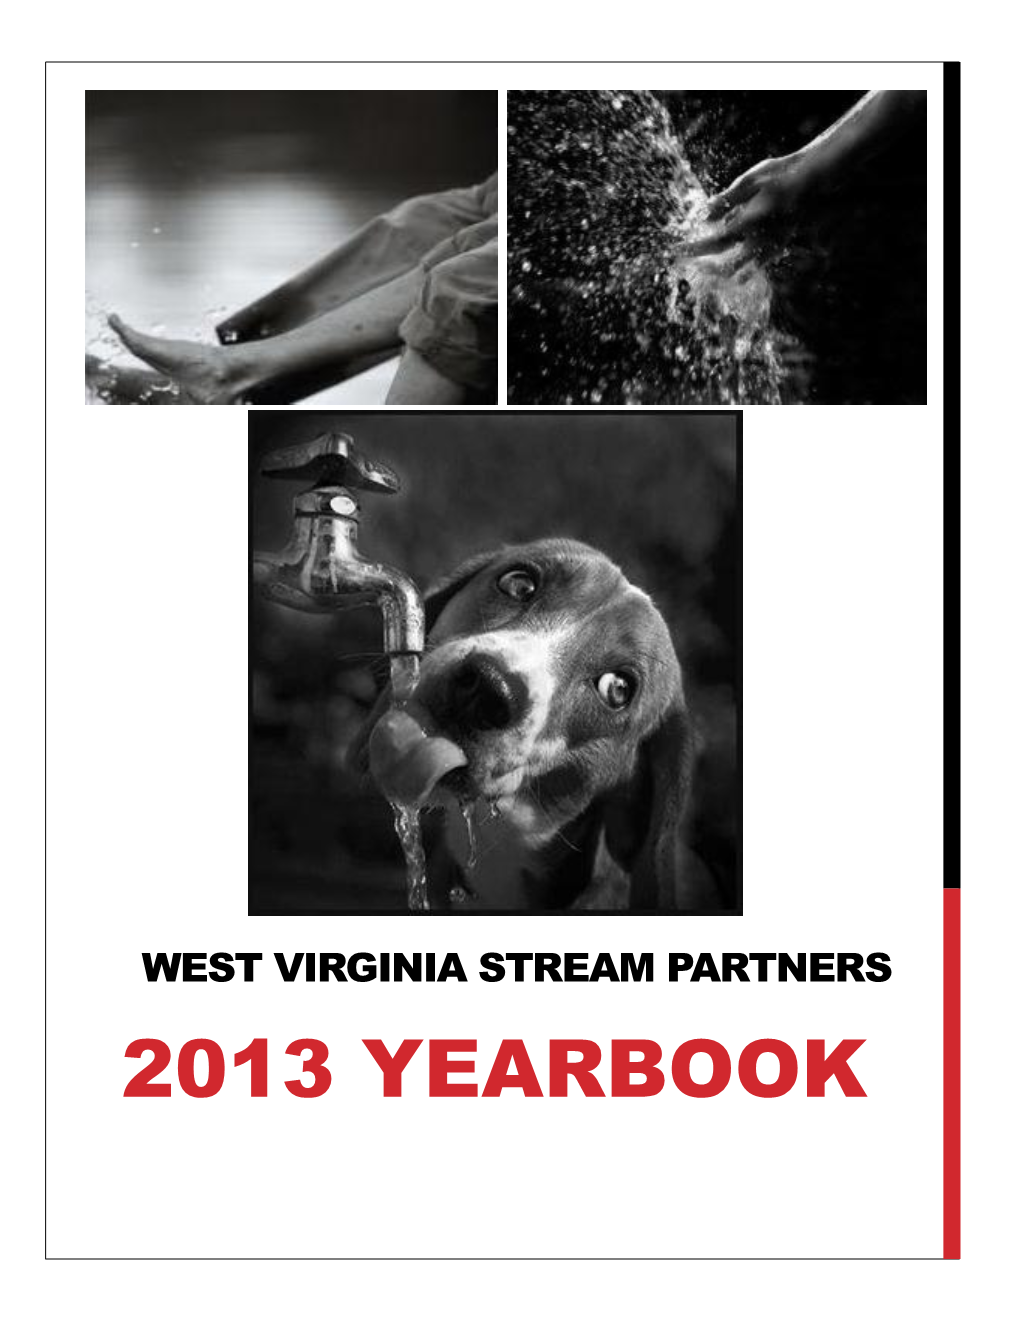 West Virginia Stream Partners 2013 Yearbook